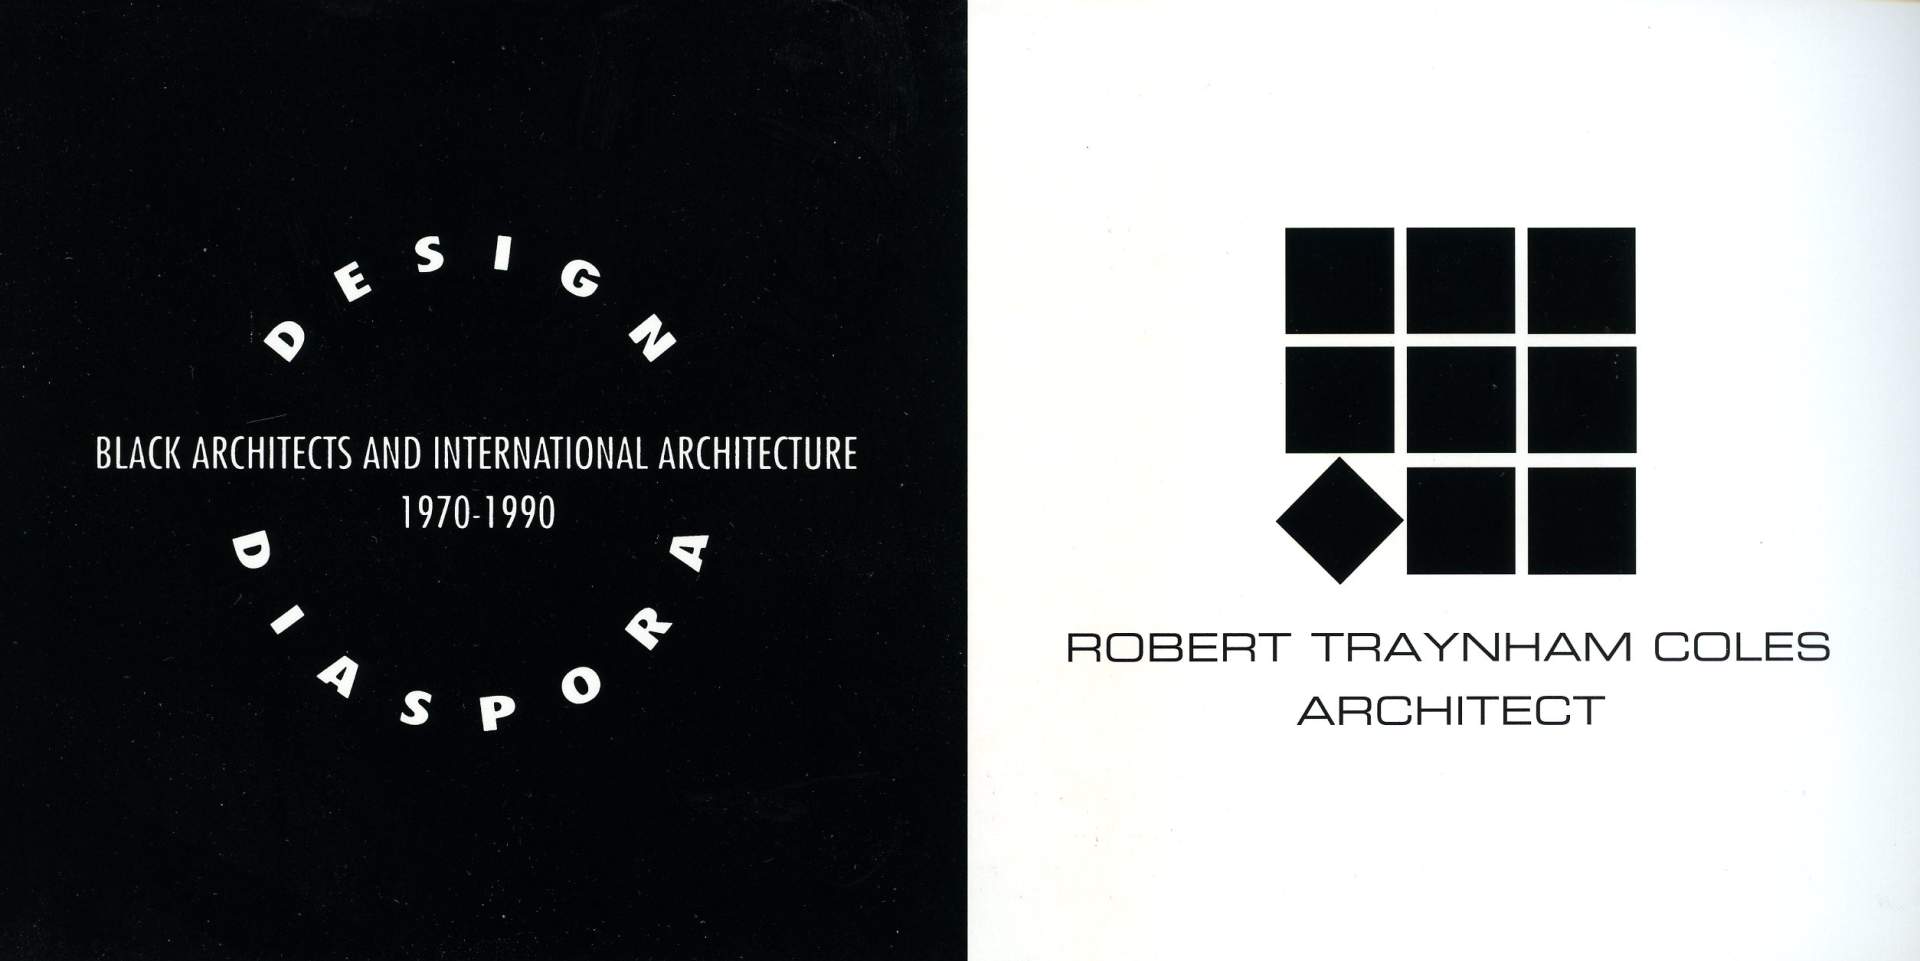 Design Diaspora: Black Architects and International Architecture 1970-90 (Organized by The Chicago Athenaeum) and Robert Traynham Coles